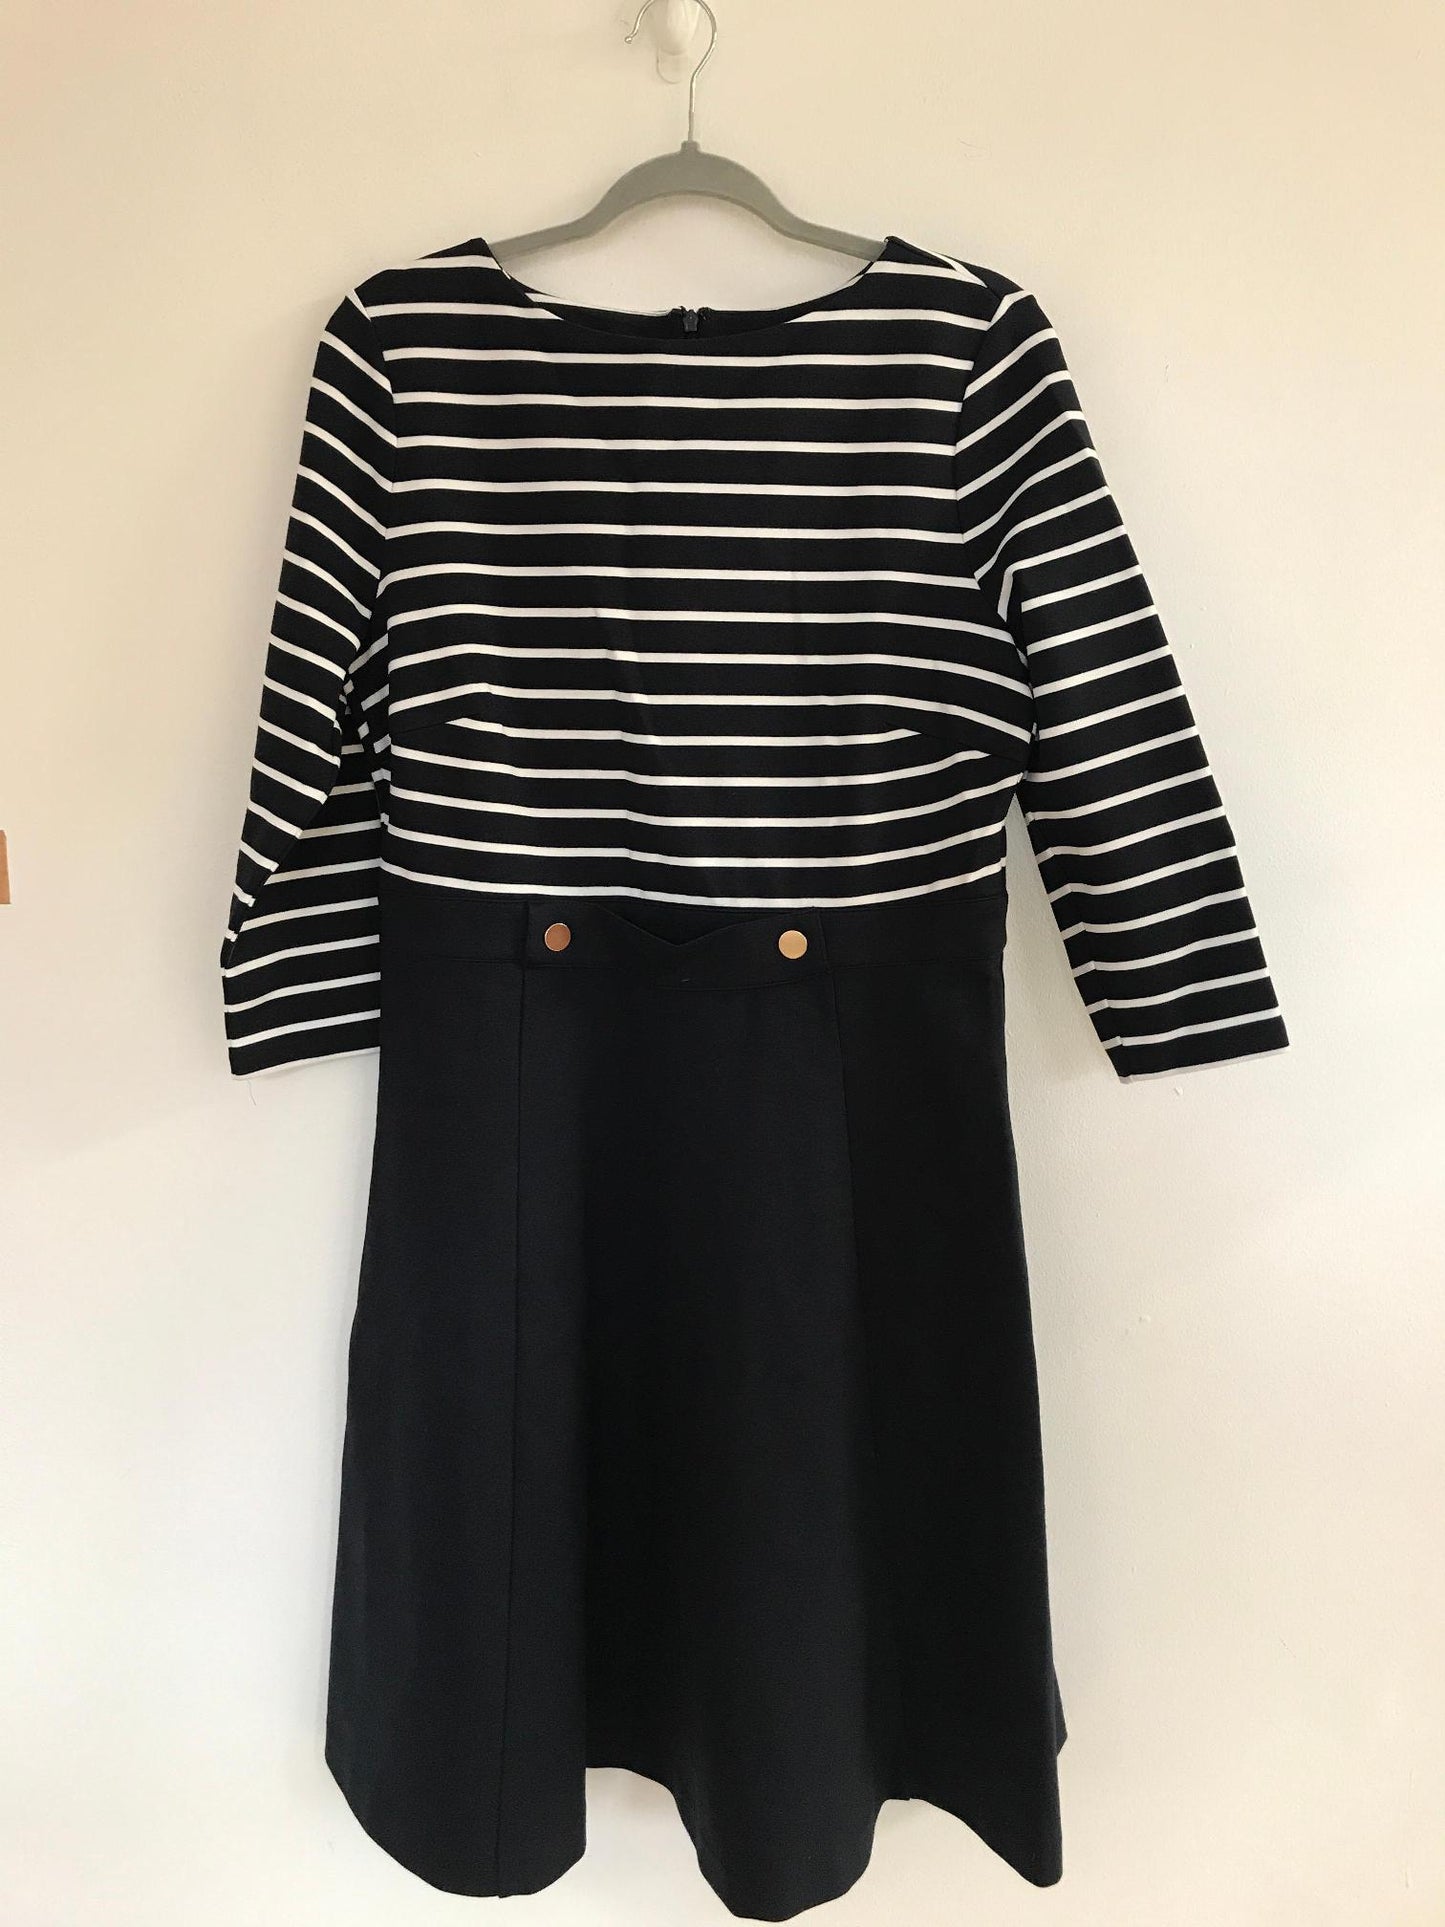 Black & White Striped Knee Length Dress w/ Gold Detailing, Hobbs, Size 14 (Viscose, Polyester, Elastane)